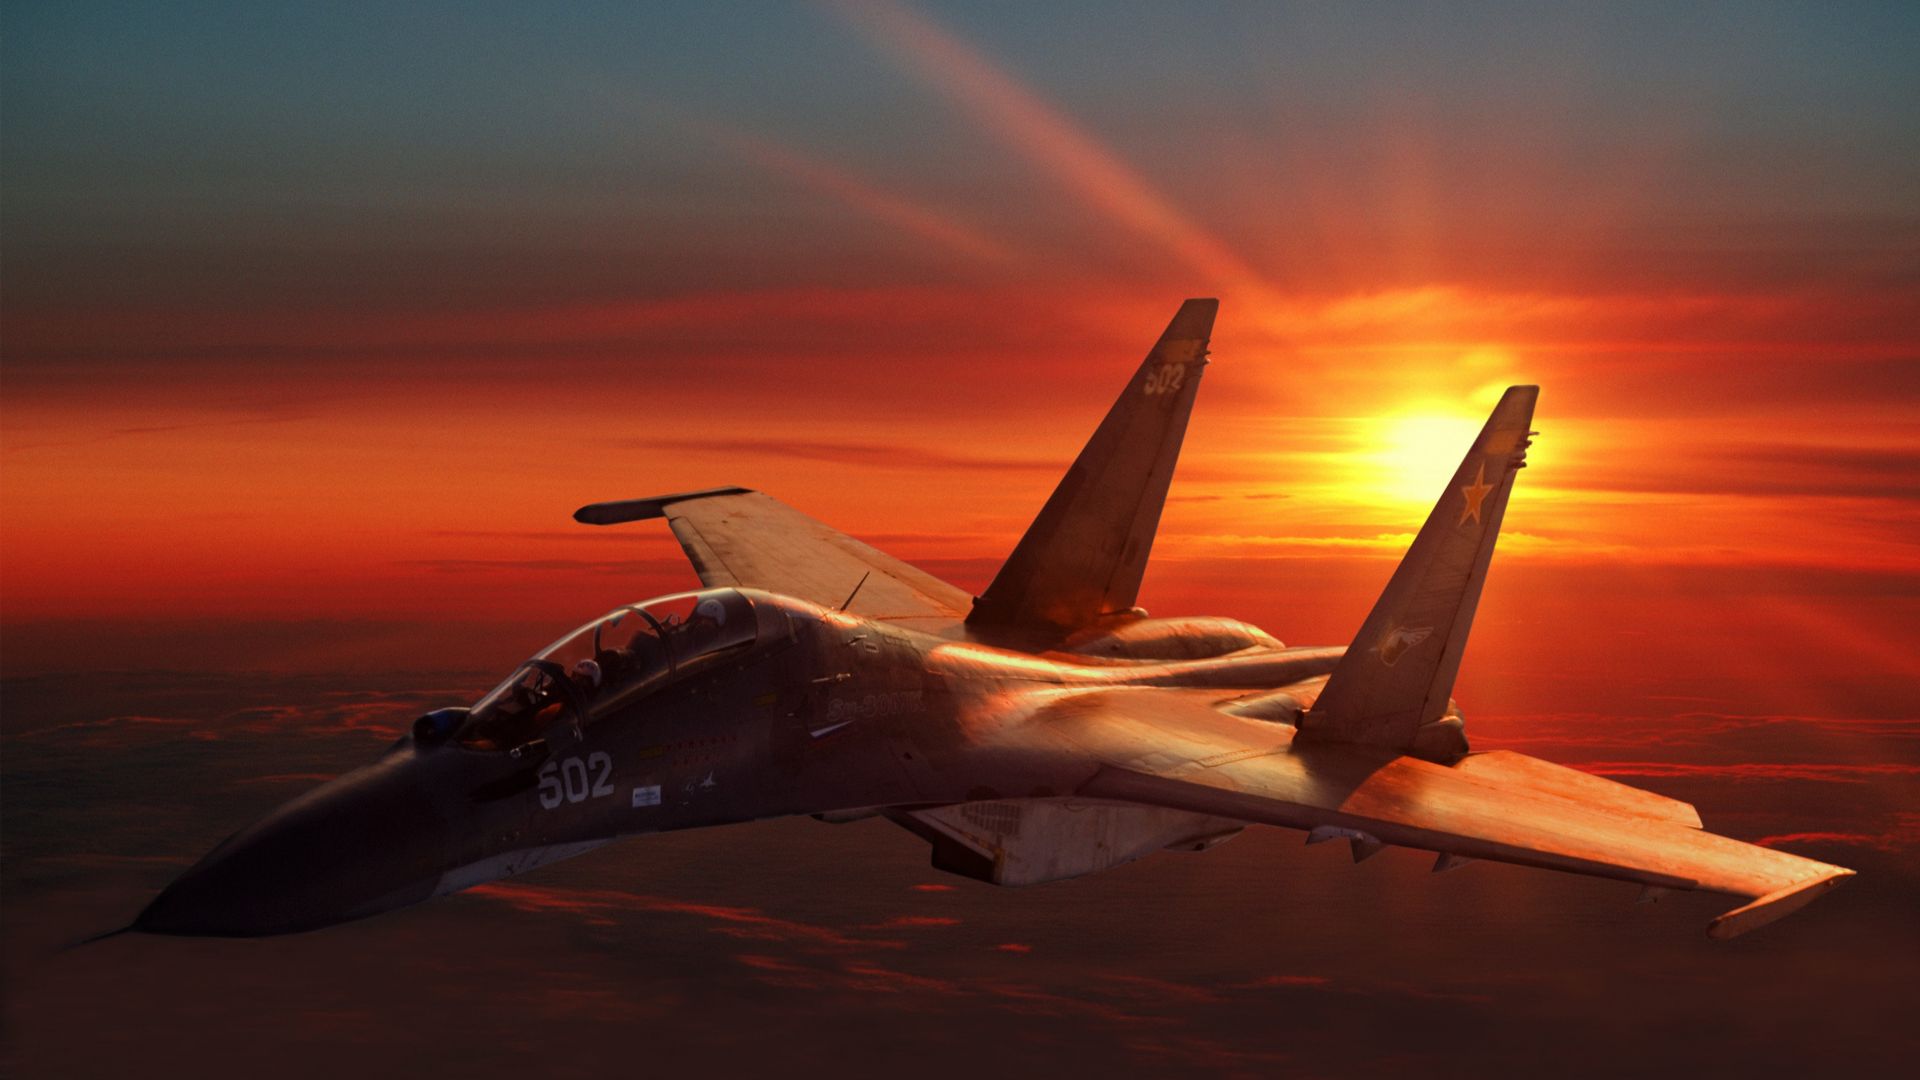 Sukhoi Su-30, fighter aircraft, sunset, Russian Army (horizontal)